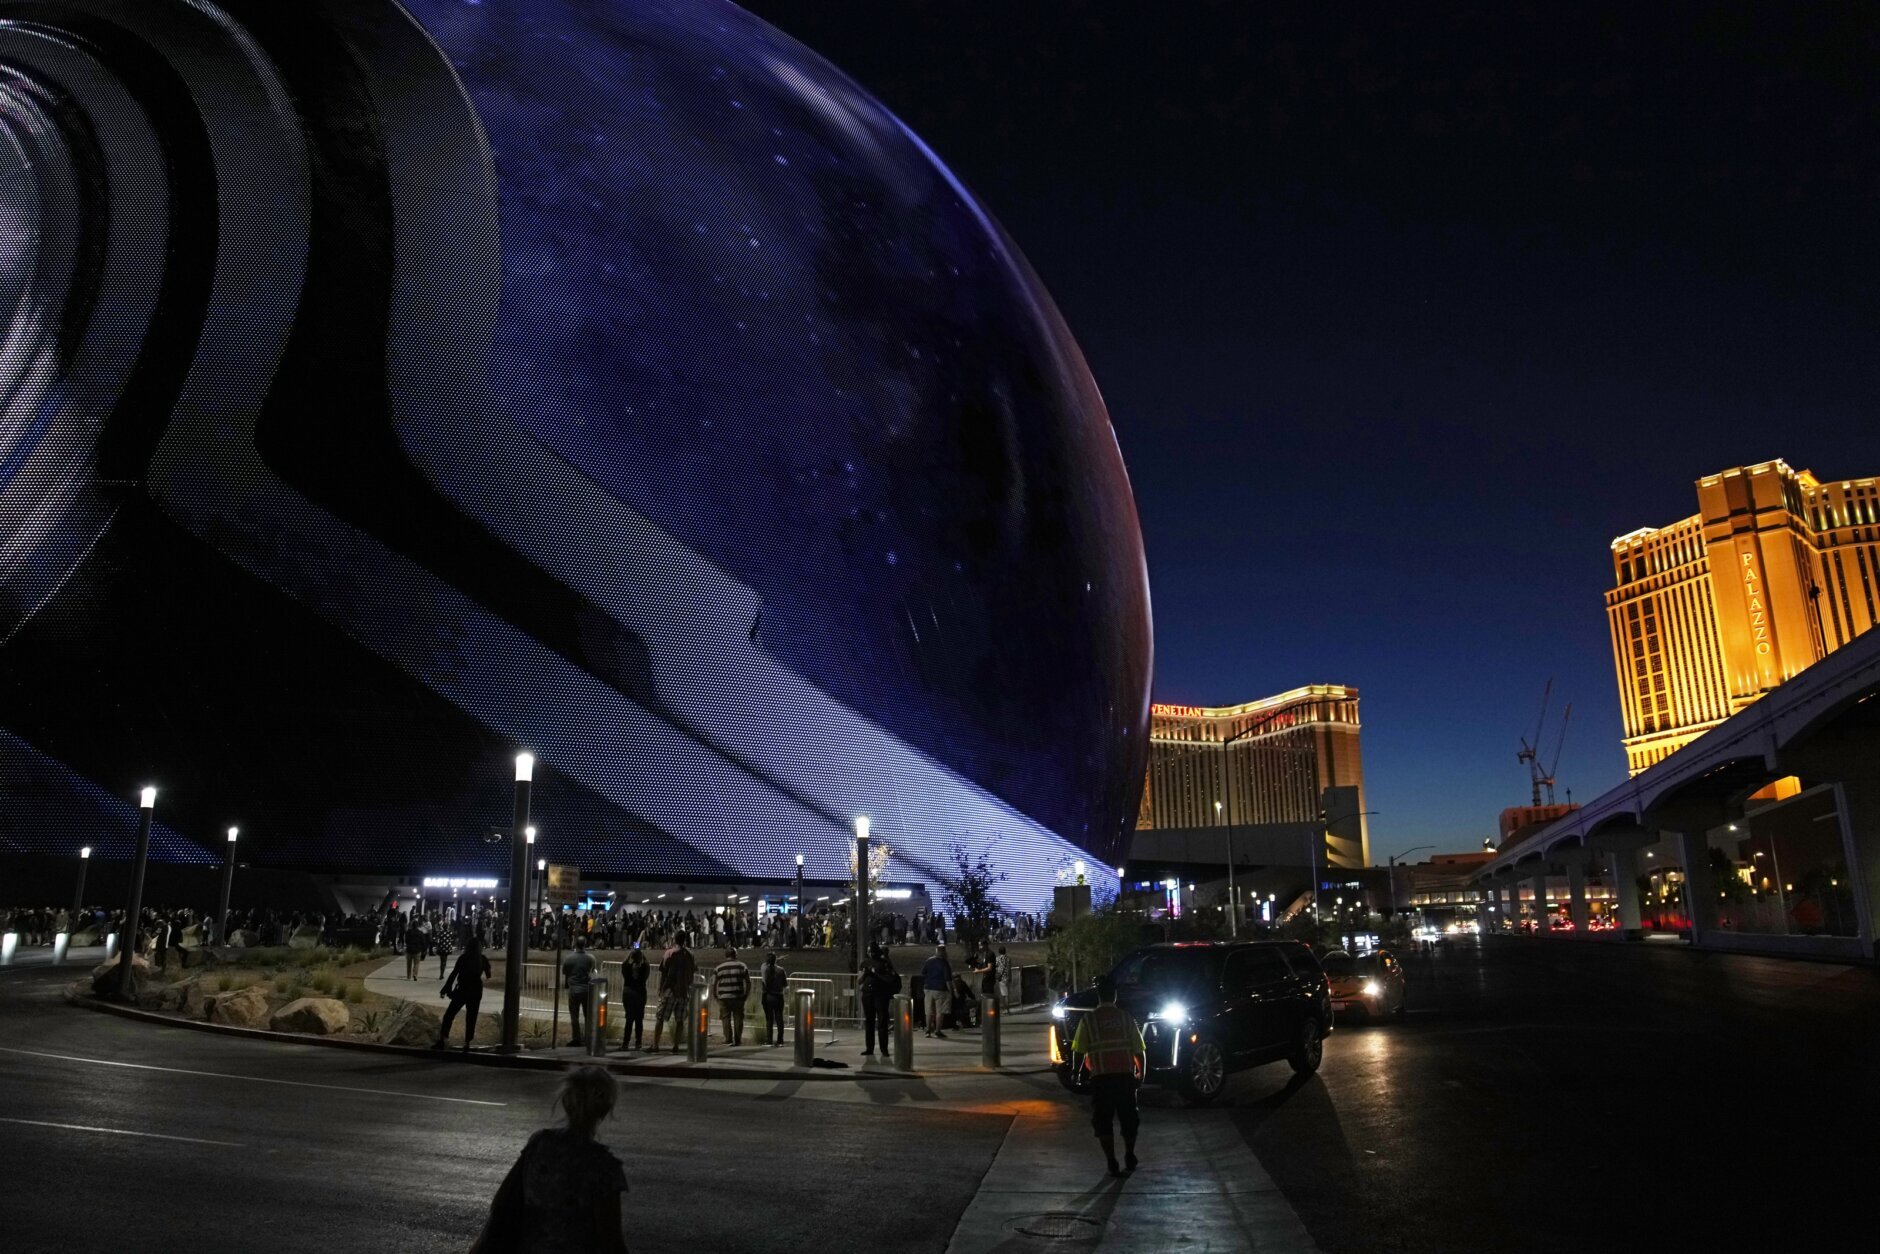 U2 concert uses stunning visuals to open massive Sphere venue in